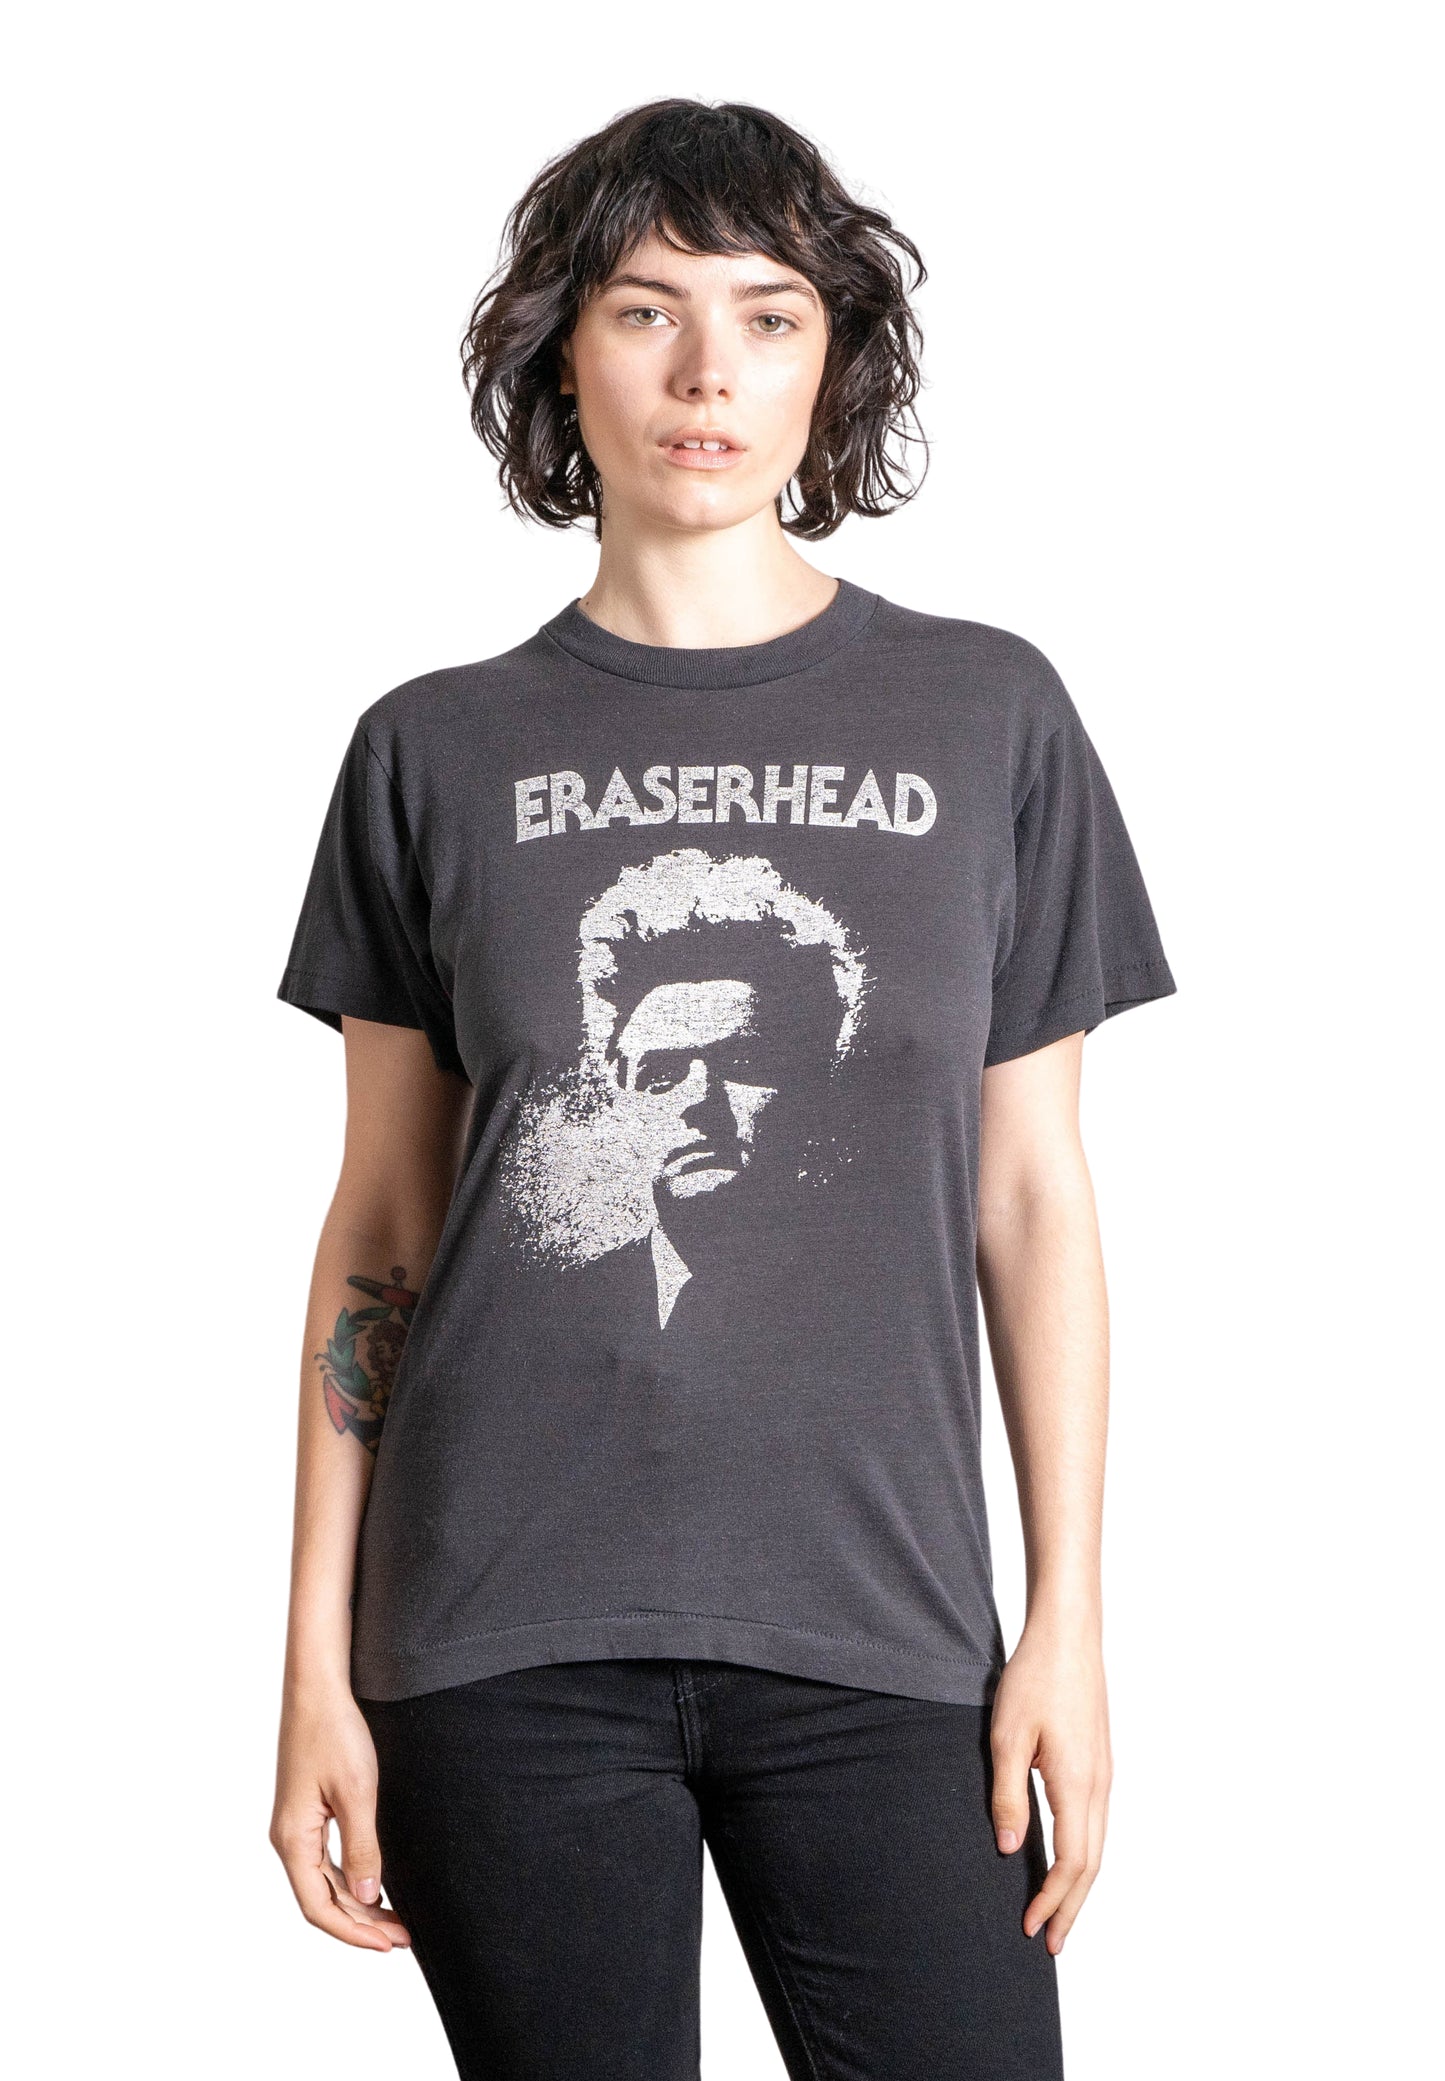 Vintage 1980’s Eraserhead Promo T-Shirt